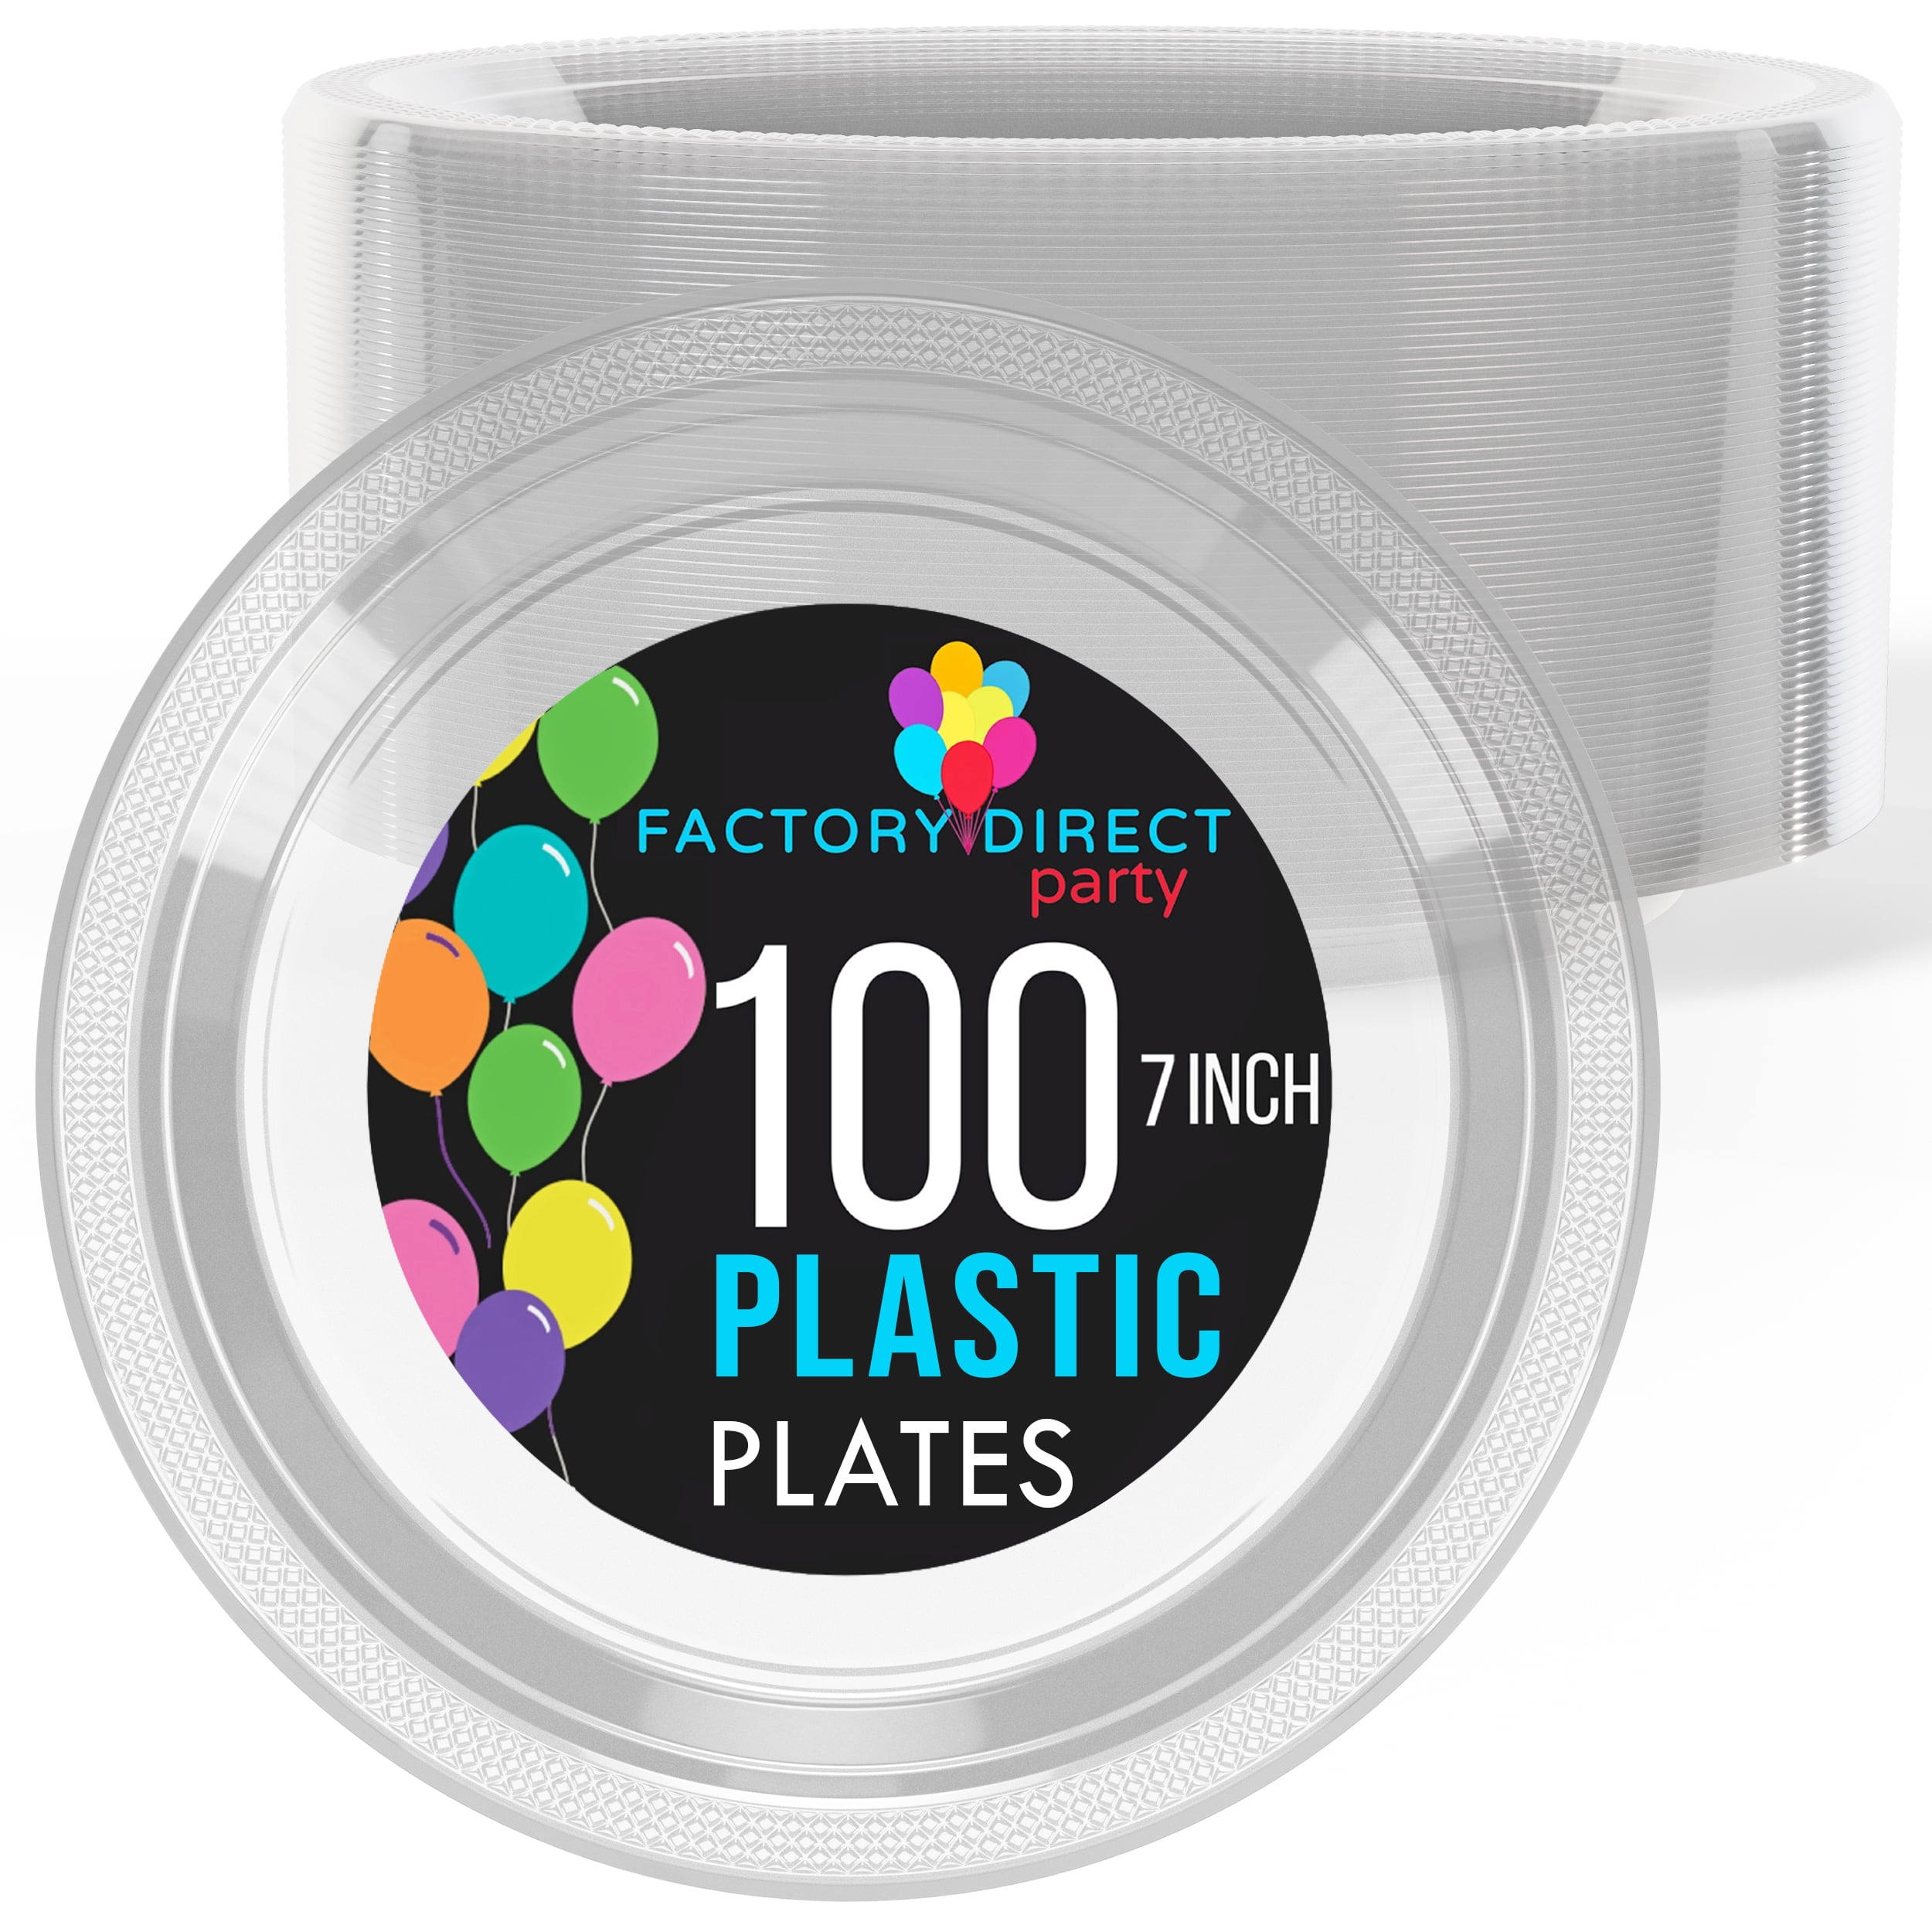 Disposable Plastic Plates Kiwi, 7 Inches Plastic Dessert Plates